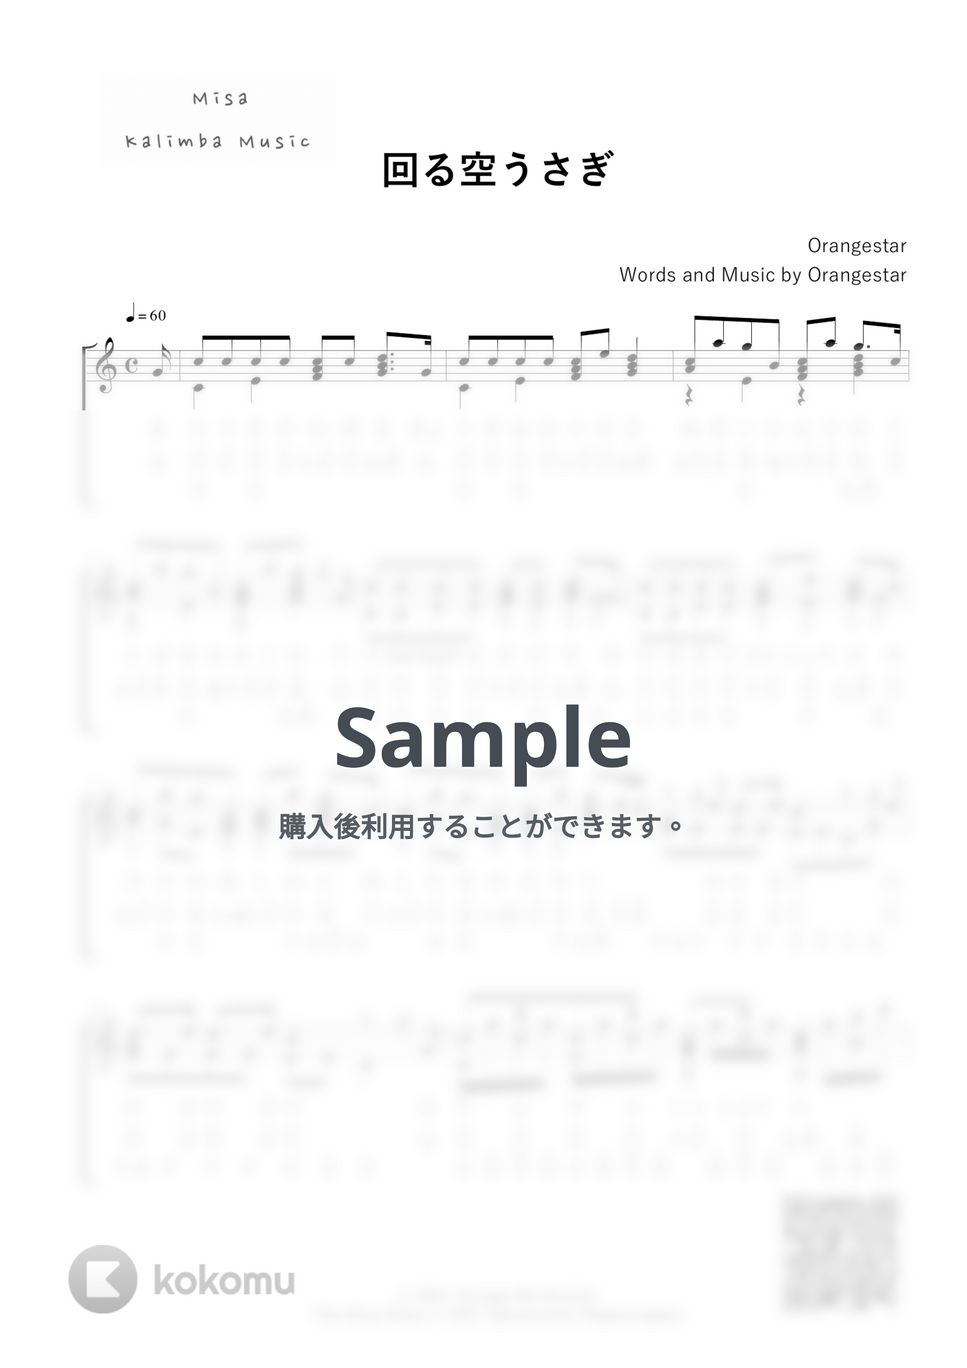 Orangestar - 回る空うさぎ / 17音カリンバ / 英音名表記 (歌詞付き/ 模範演奏付き) by Misa / Kalimba Music